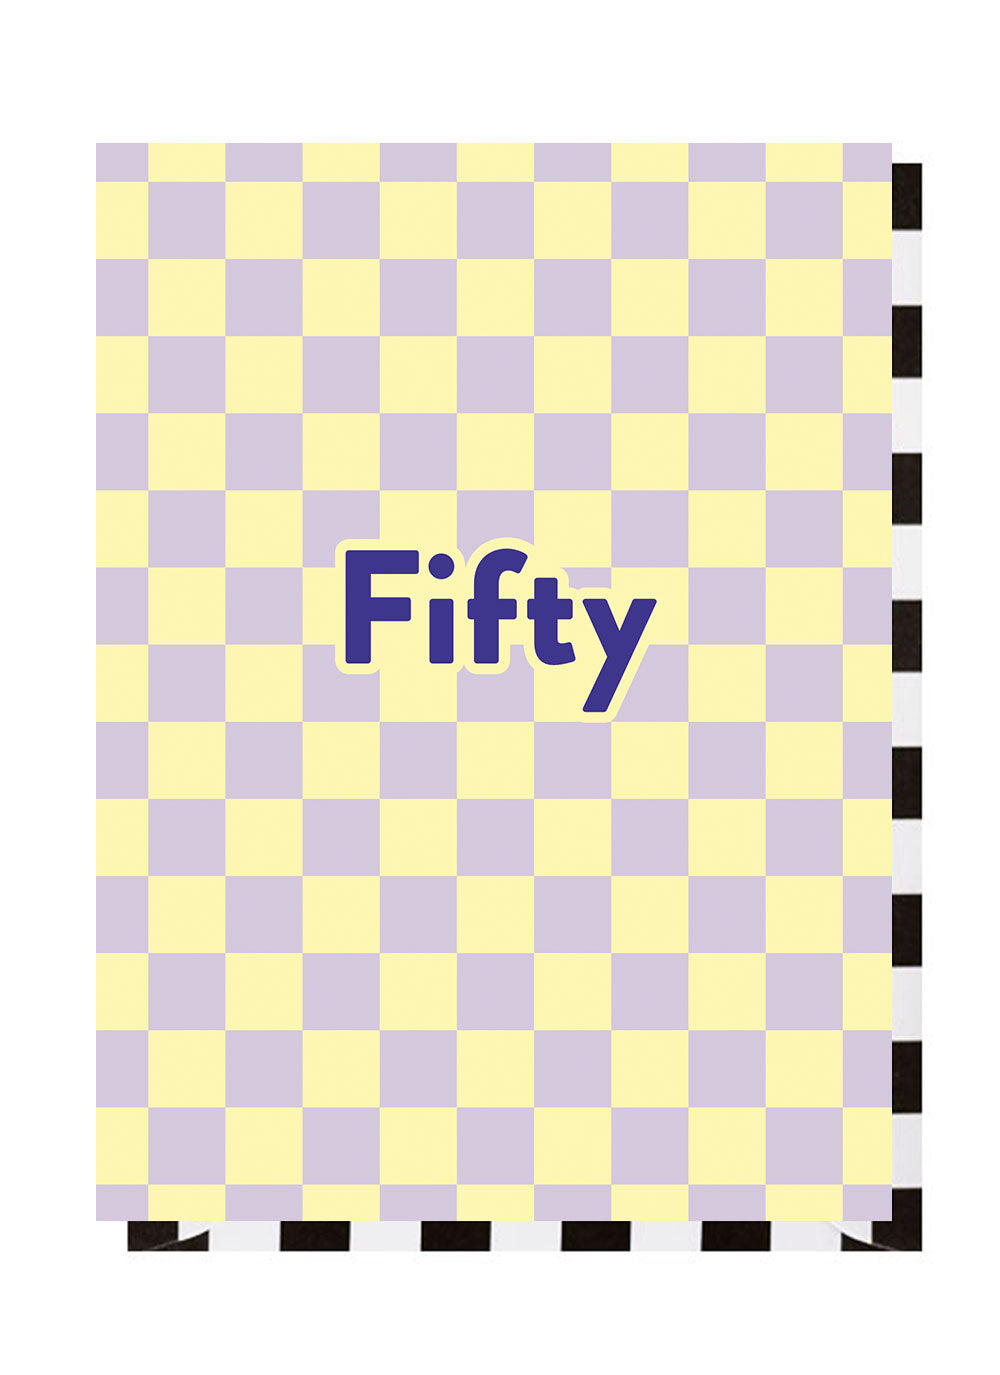 Fifty Checkerboard 50th Birthday Card